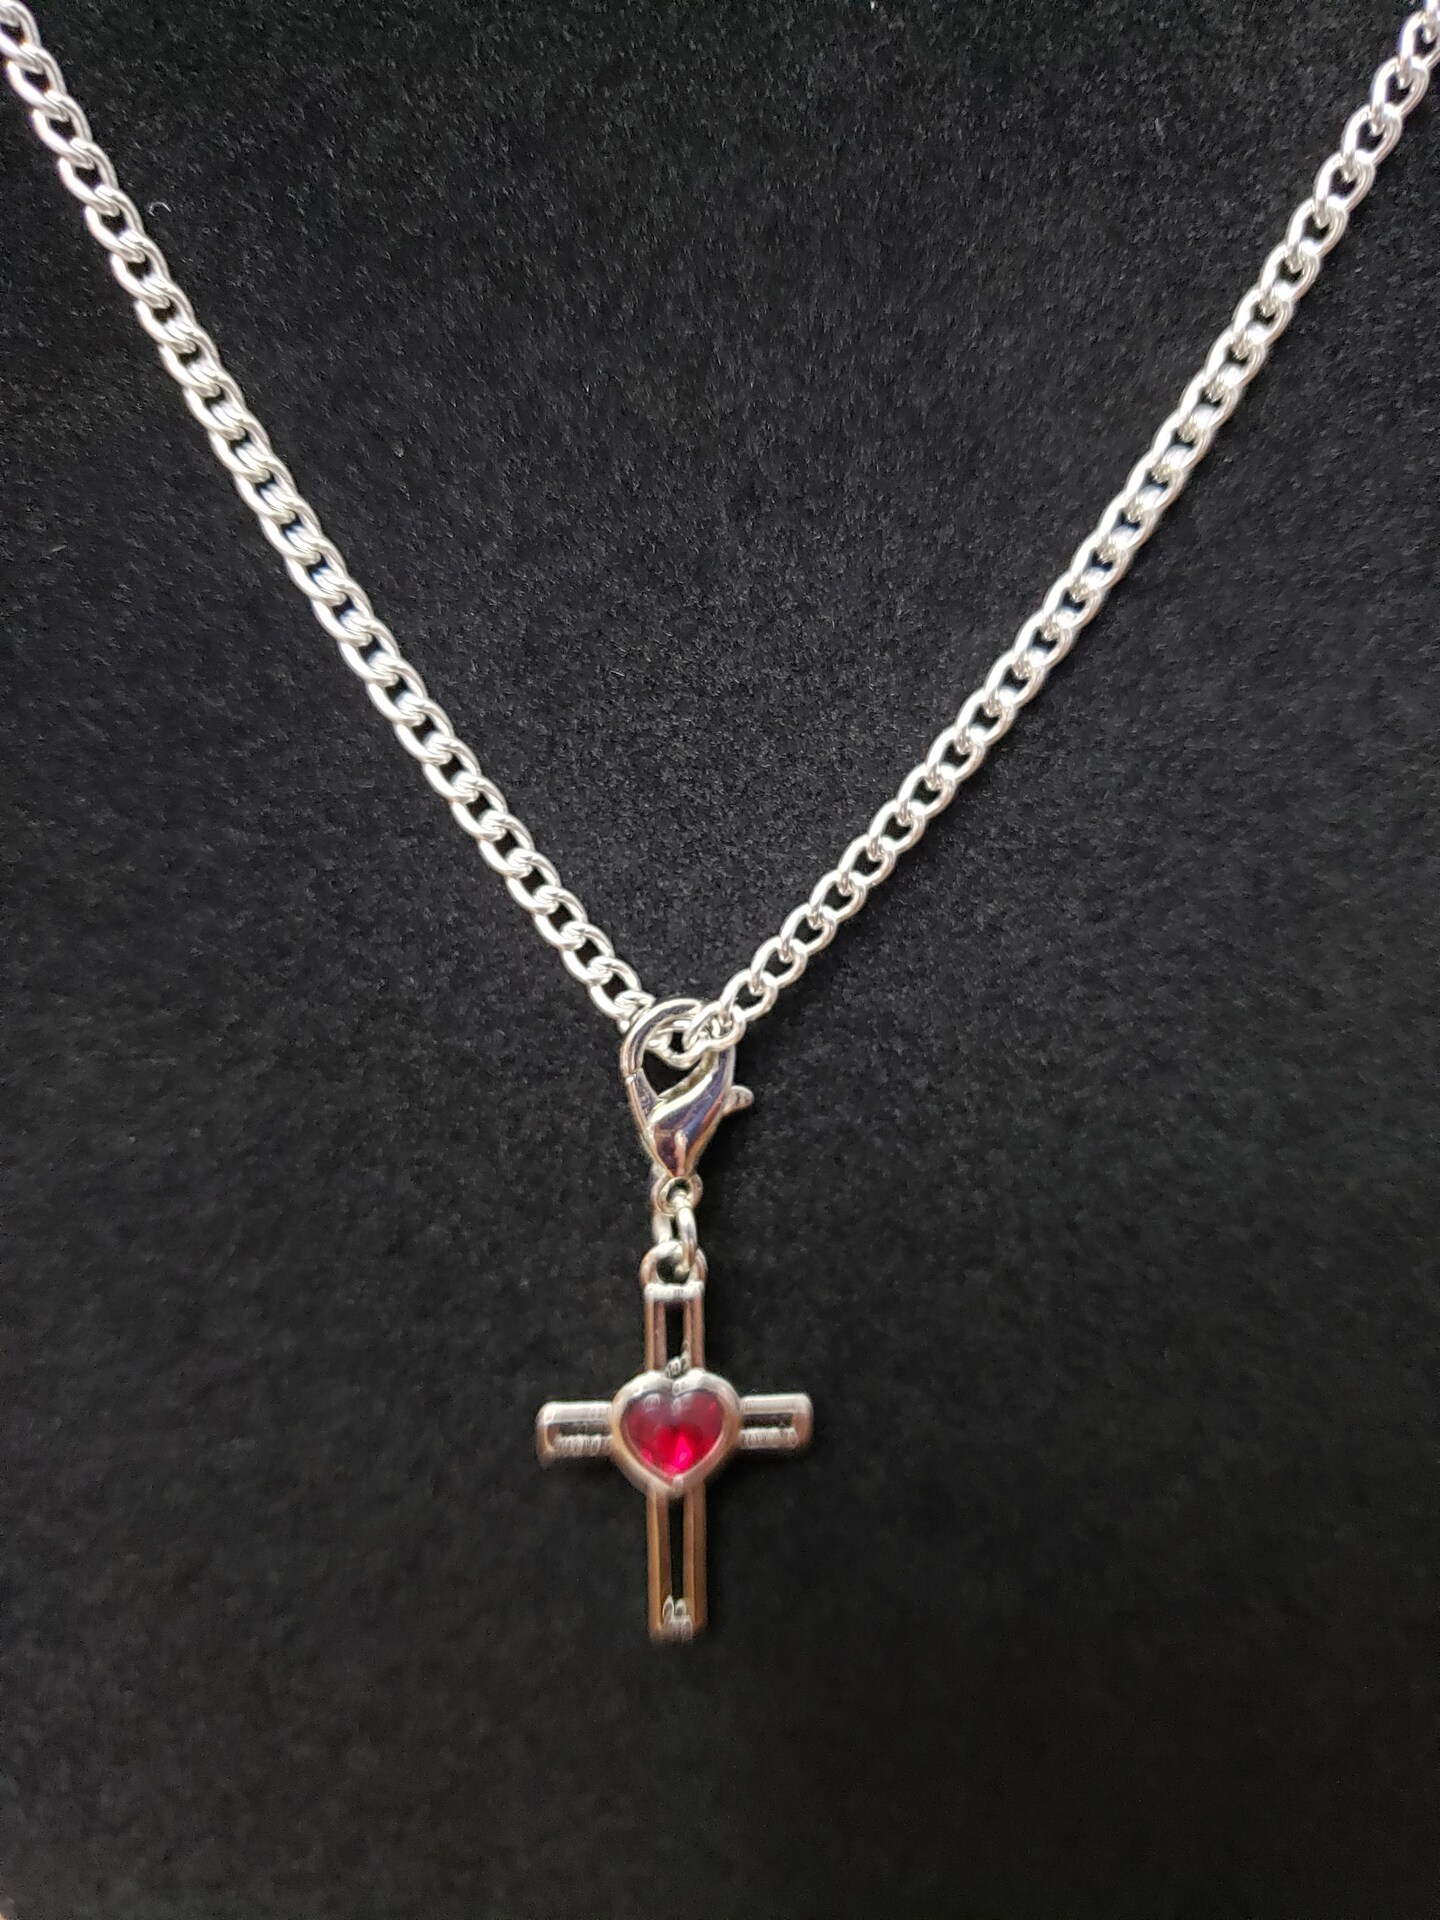 Sterling Silver Heart & Cross Necklace